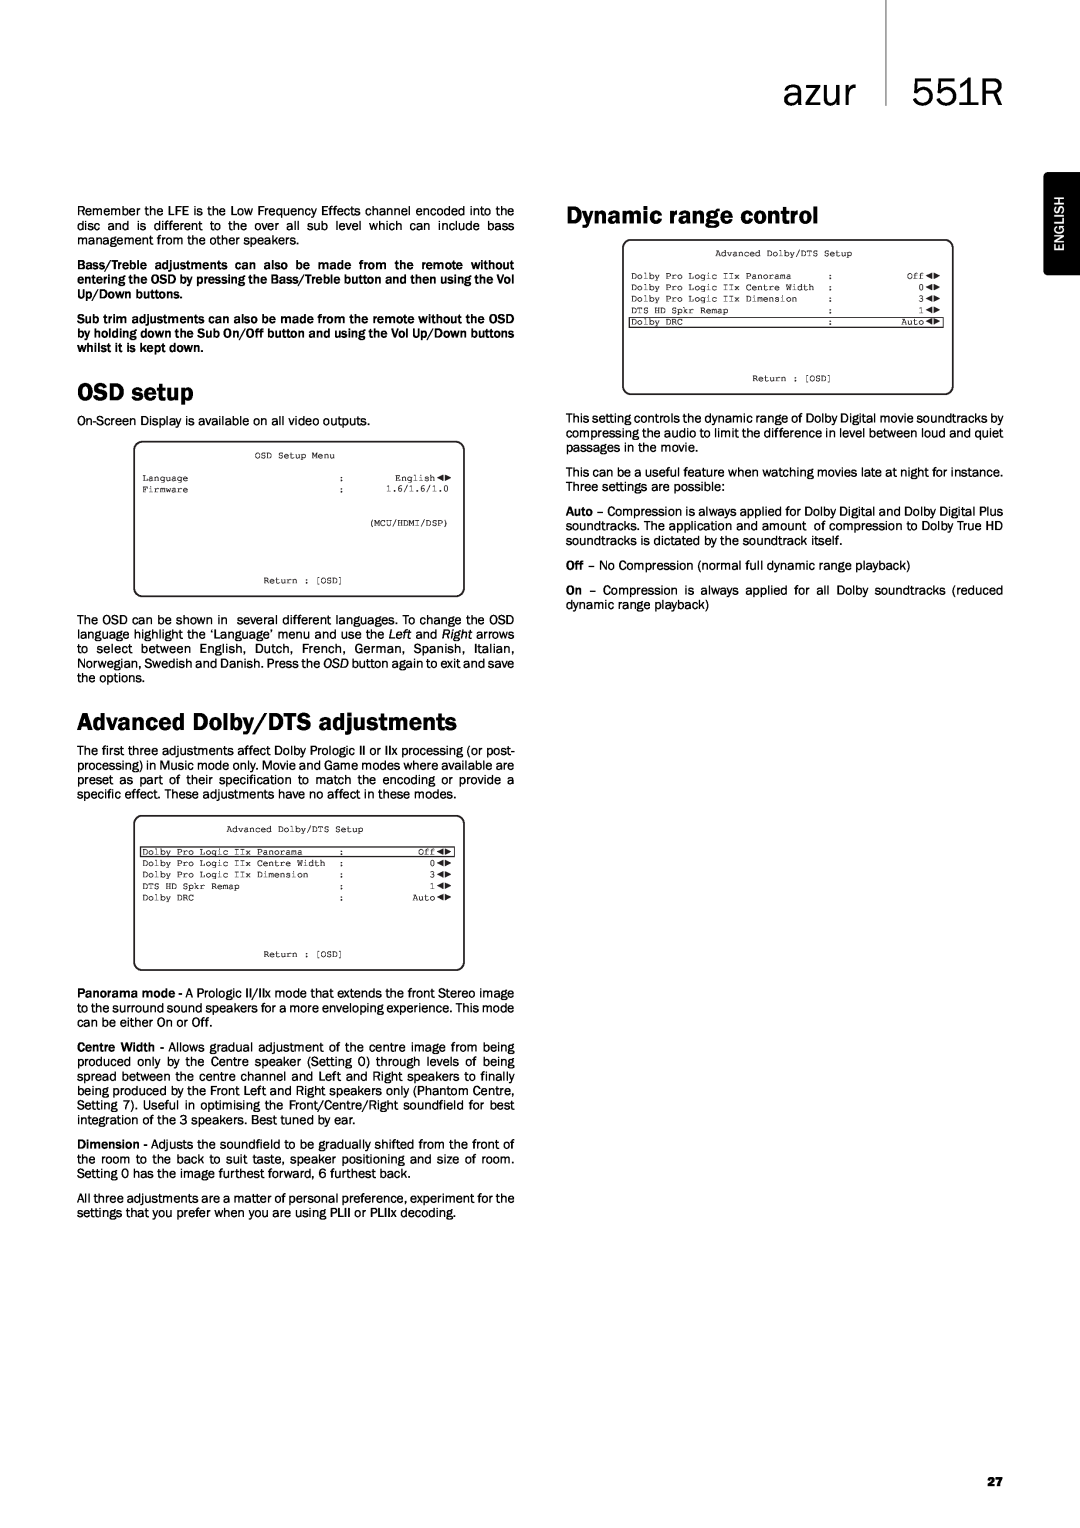 Cambridge Audio user manual OSDsetup, AdvancedDolby/DTSadjustments, Dynamicrangecontrol, azur 551R, English 